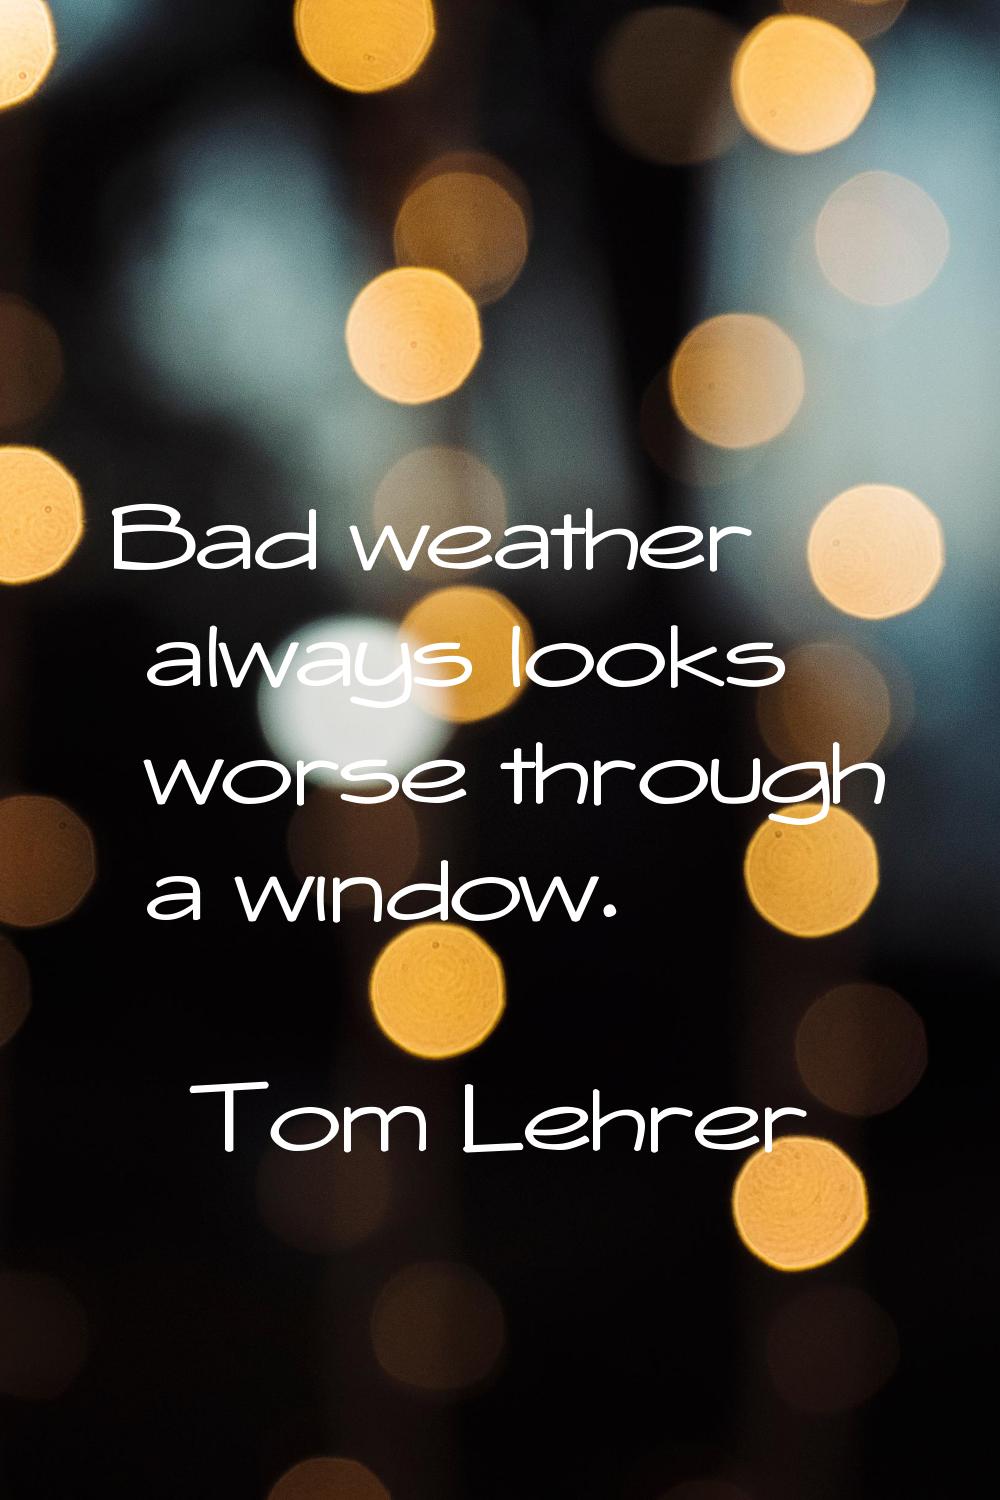 Bad weather always looks worse through a window.